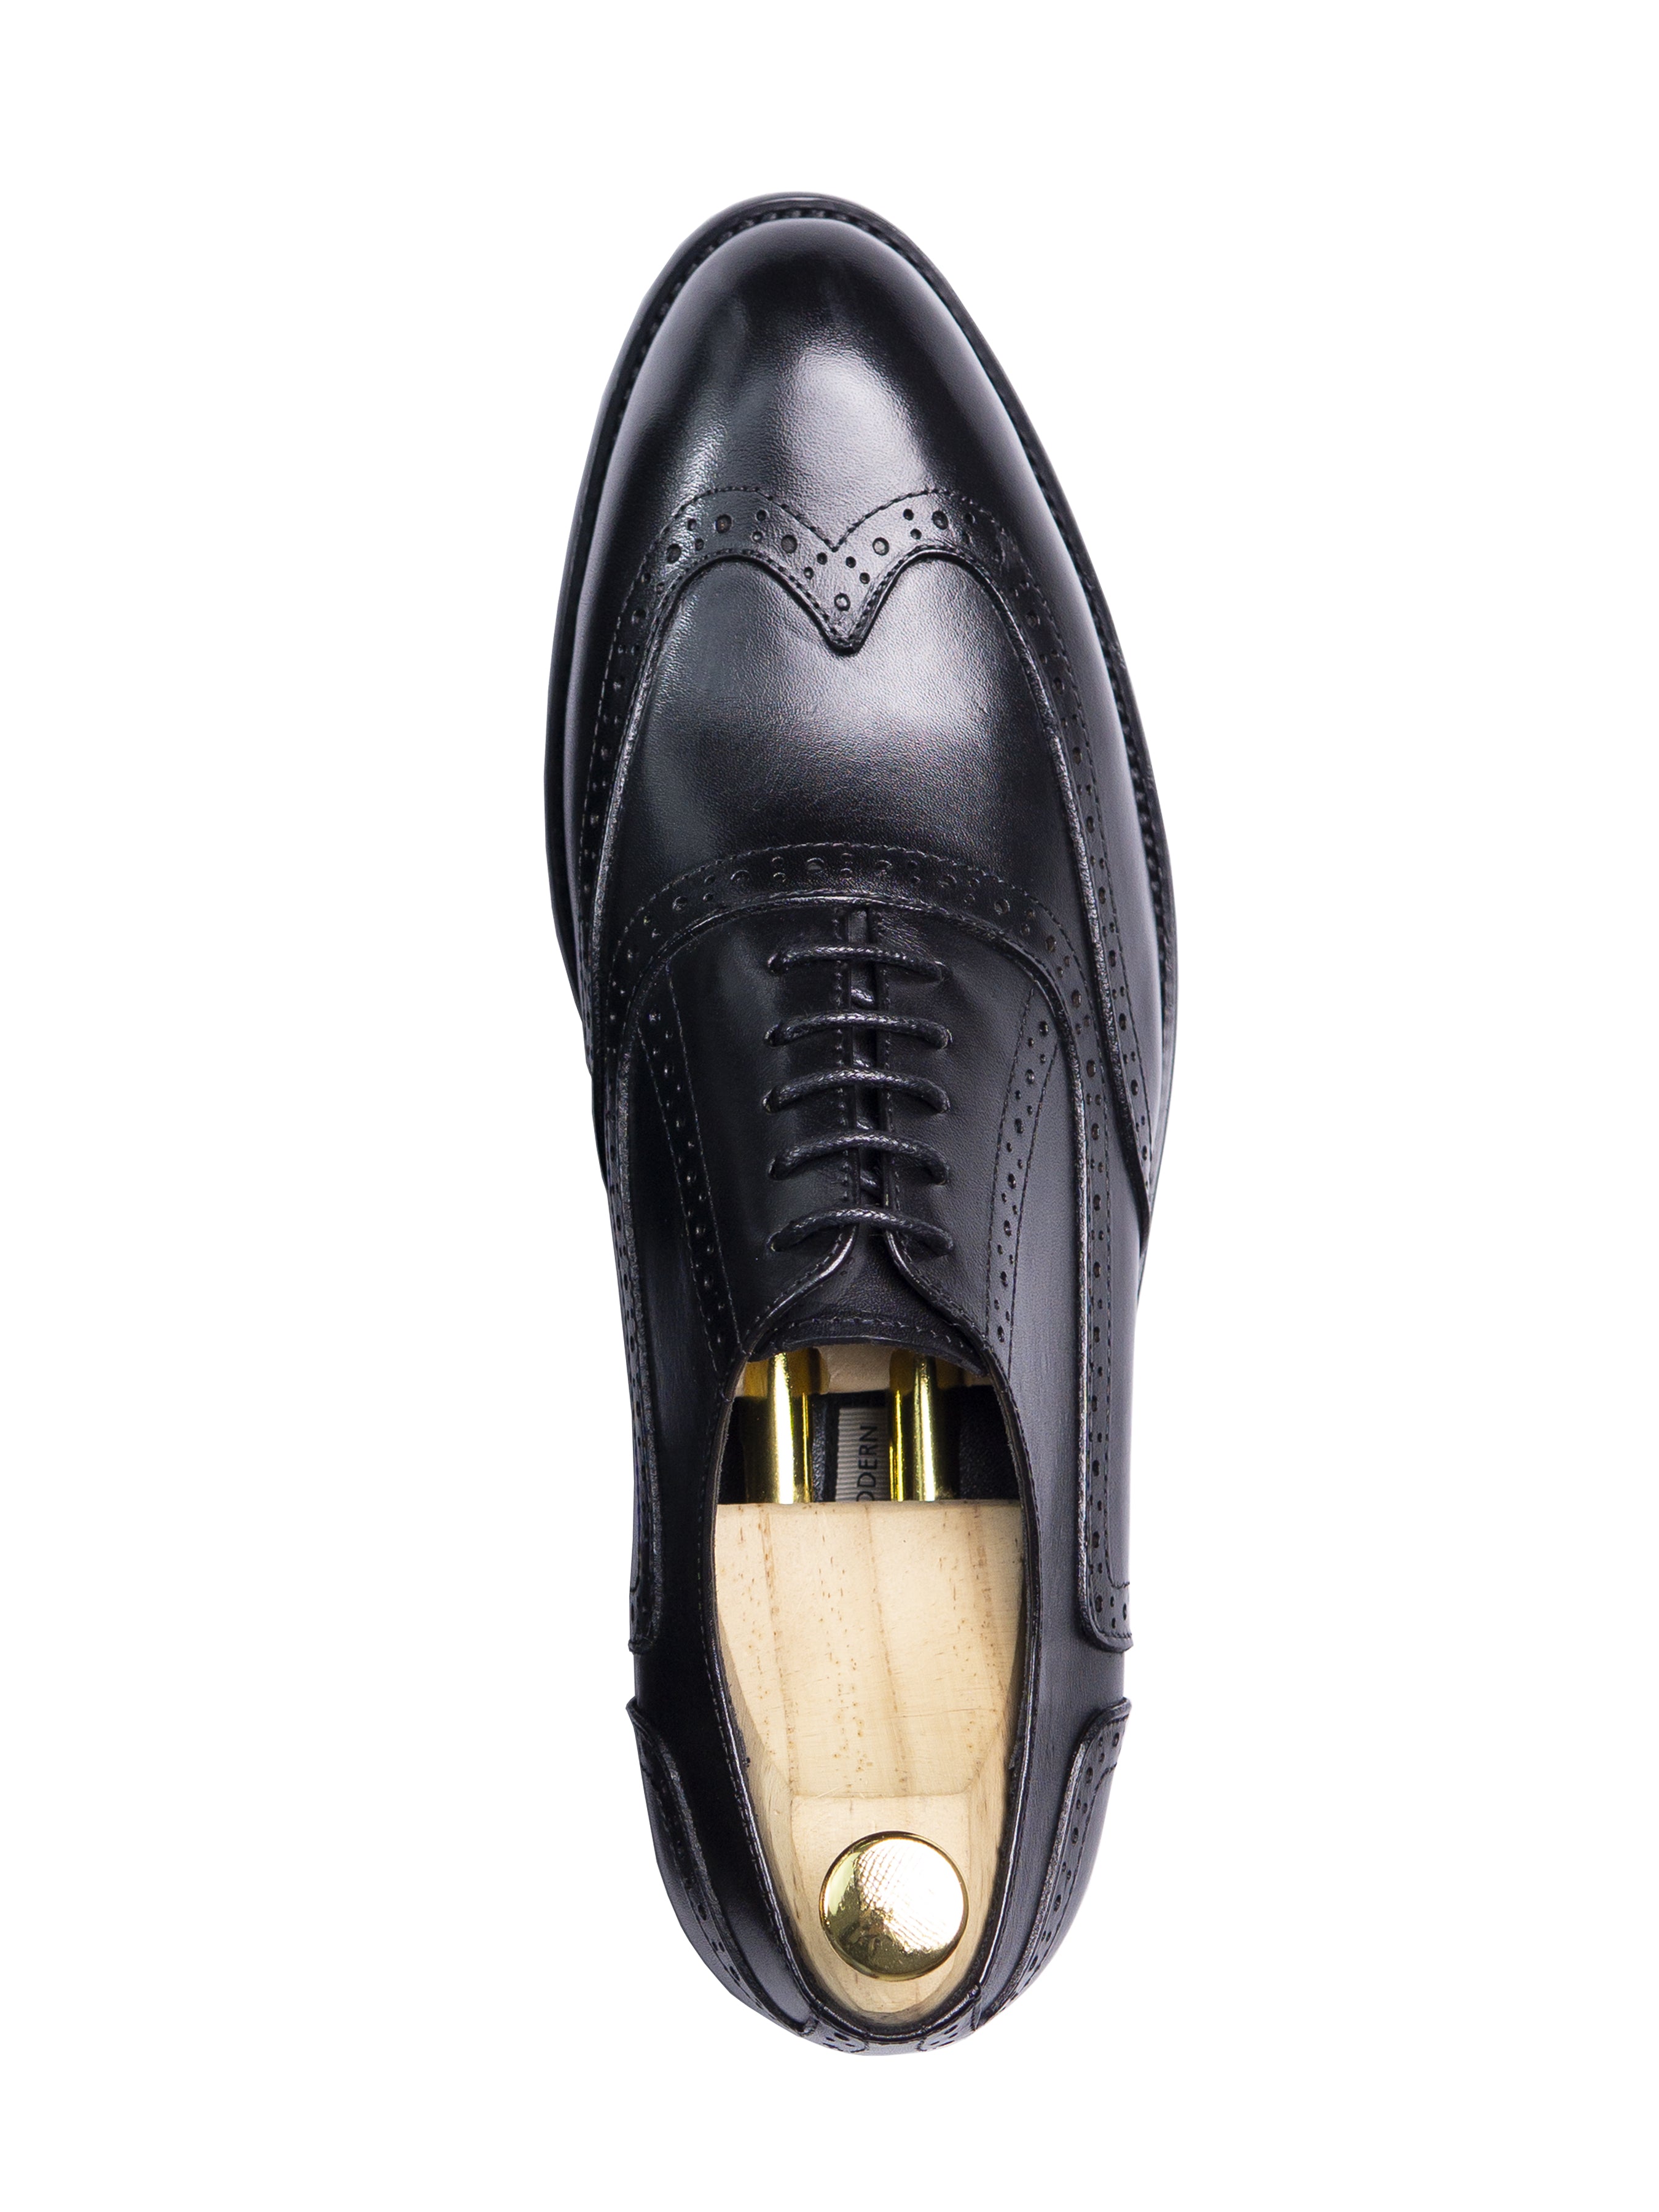 Oxford Brogue Wingtip - Black Lace Up - Zeve Shoes